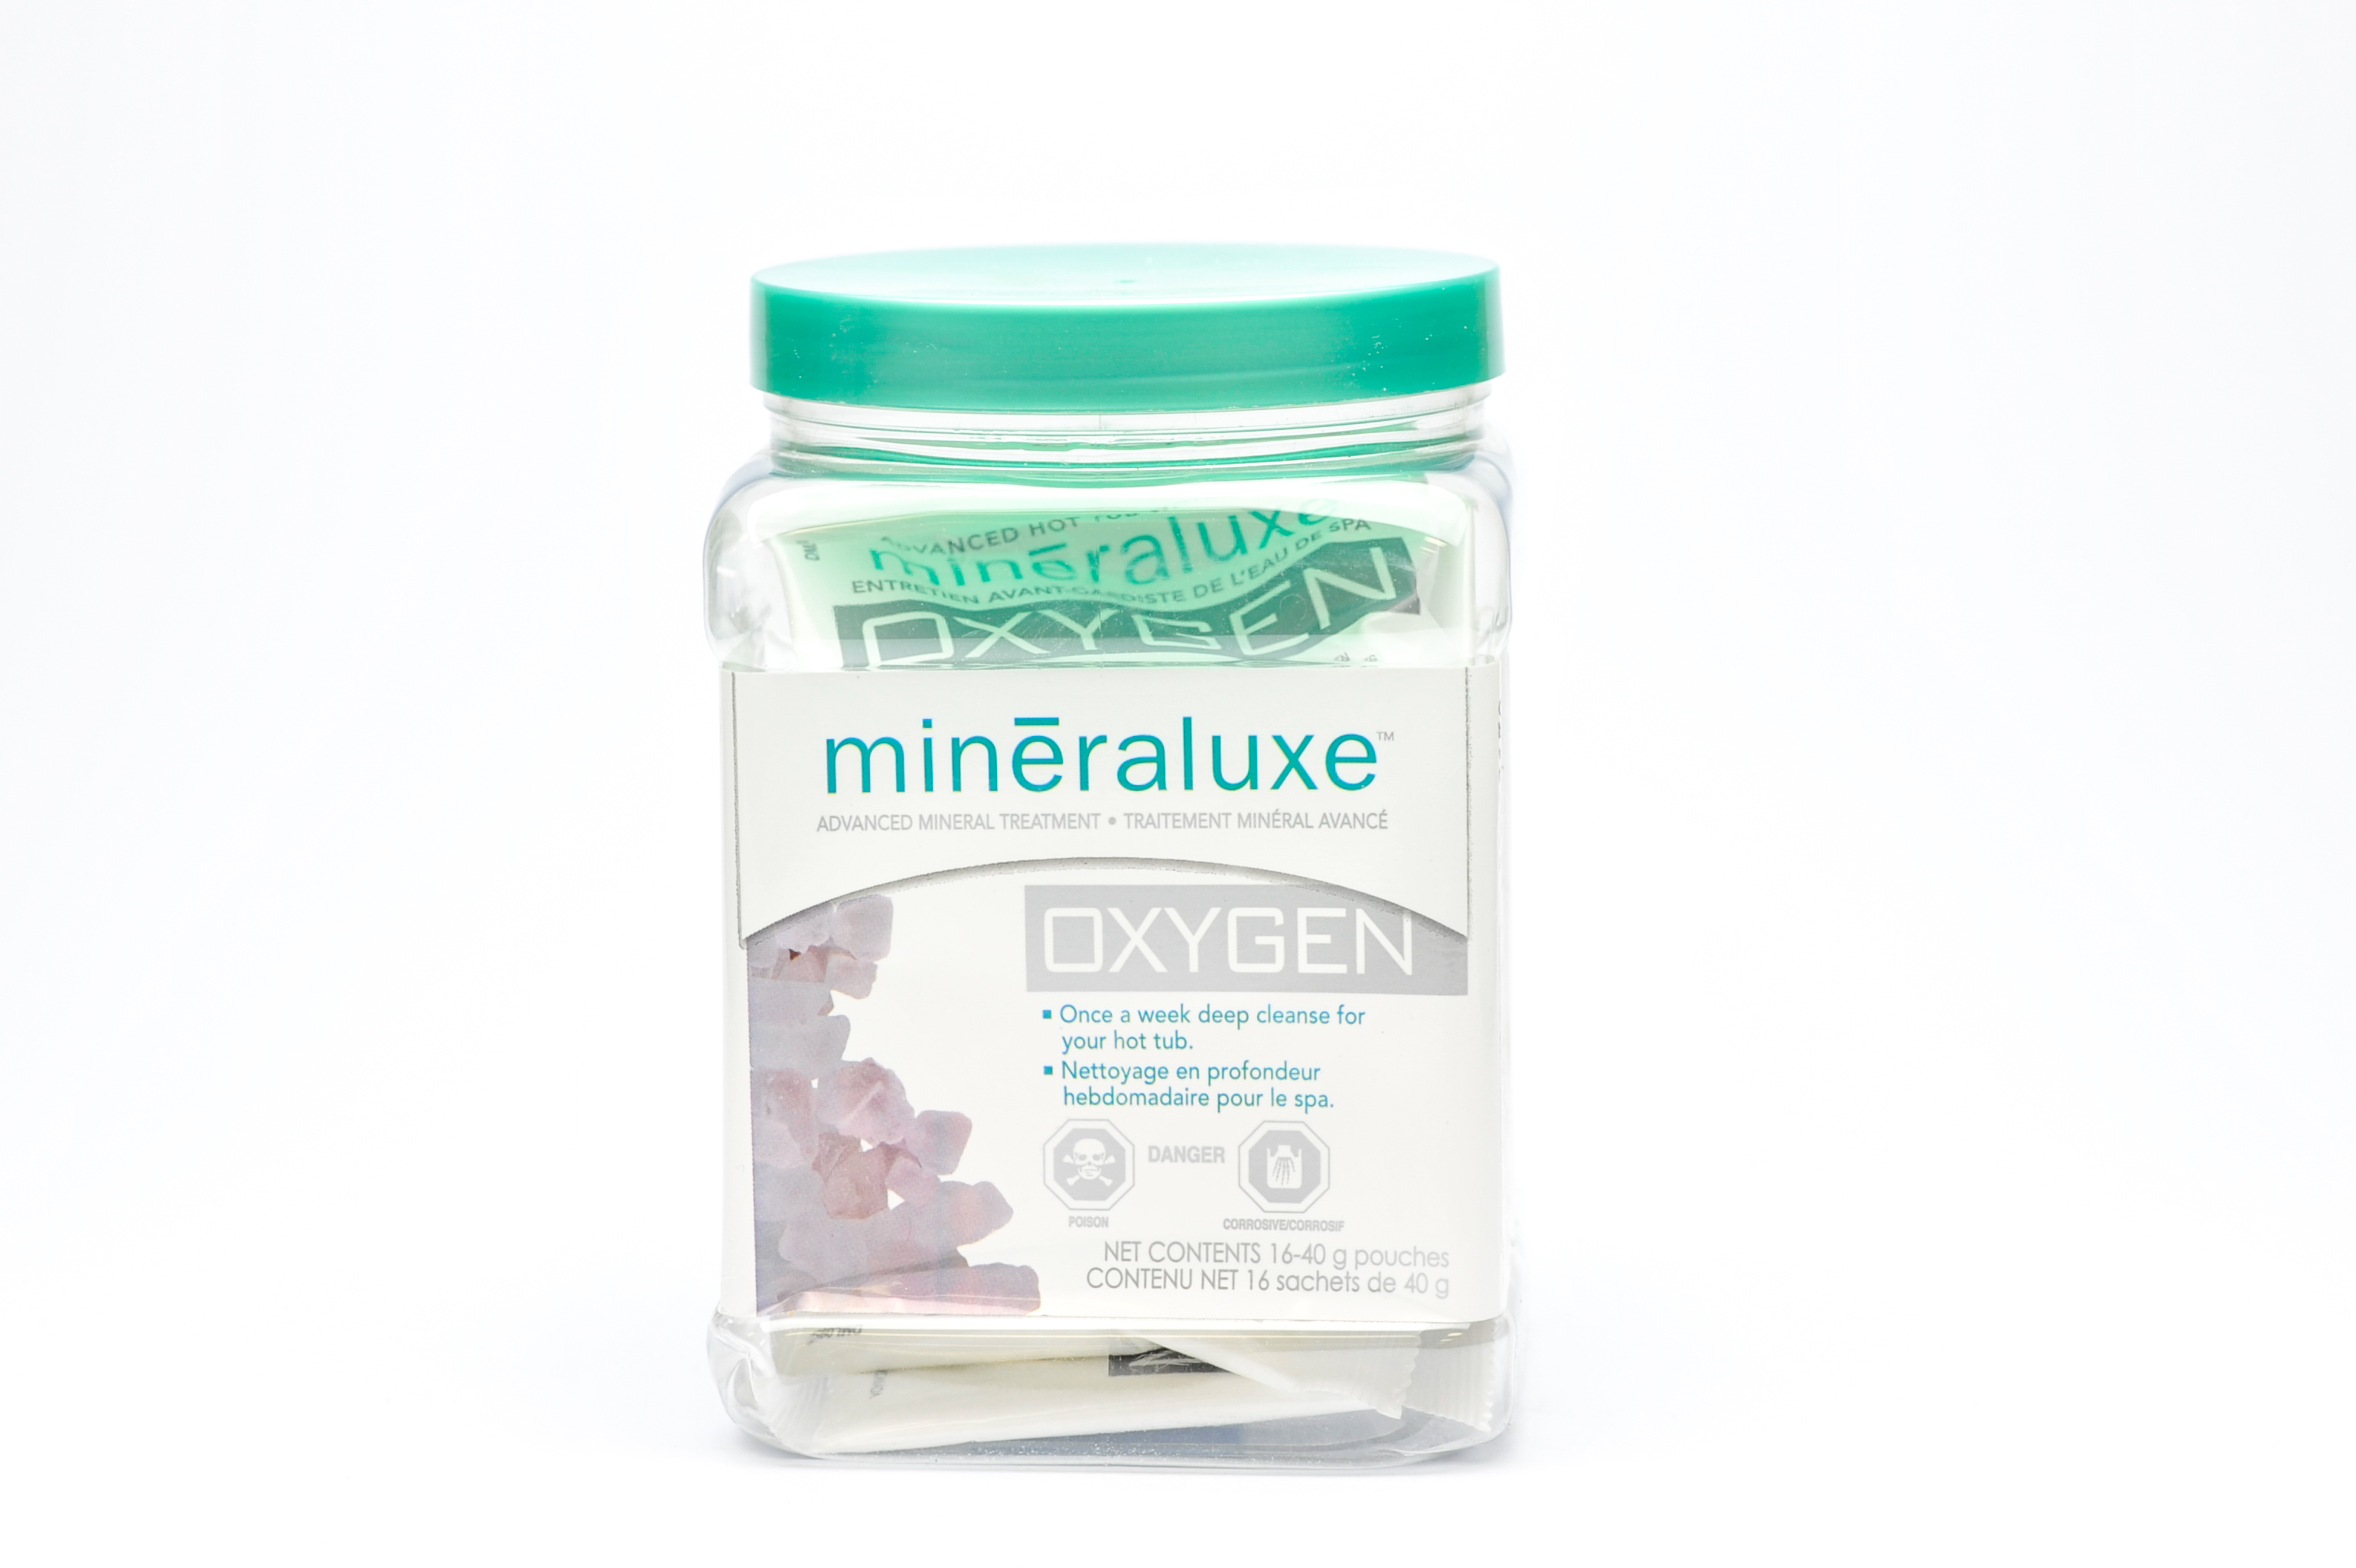 Mineraluxe Oxygen Plus 8 Per Case - LINERS